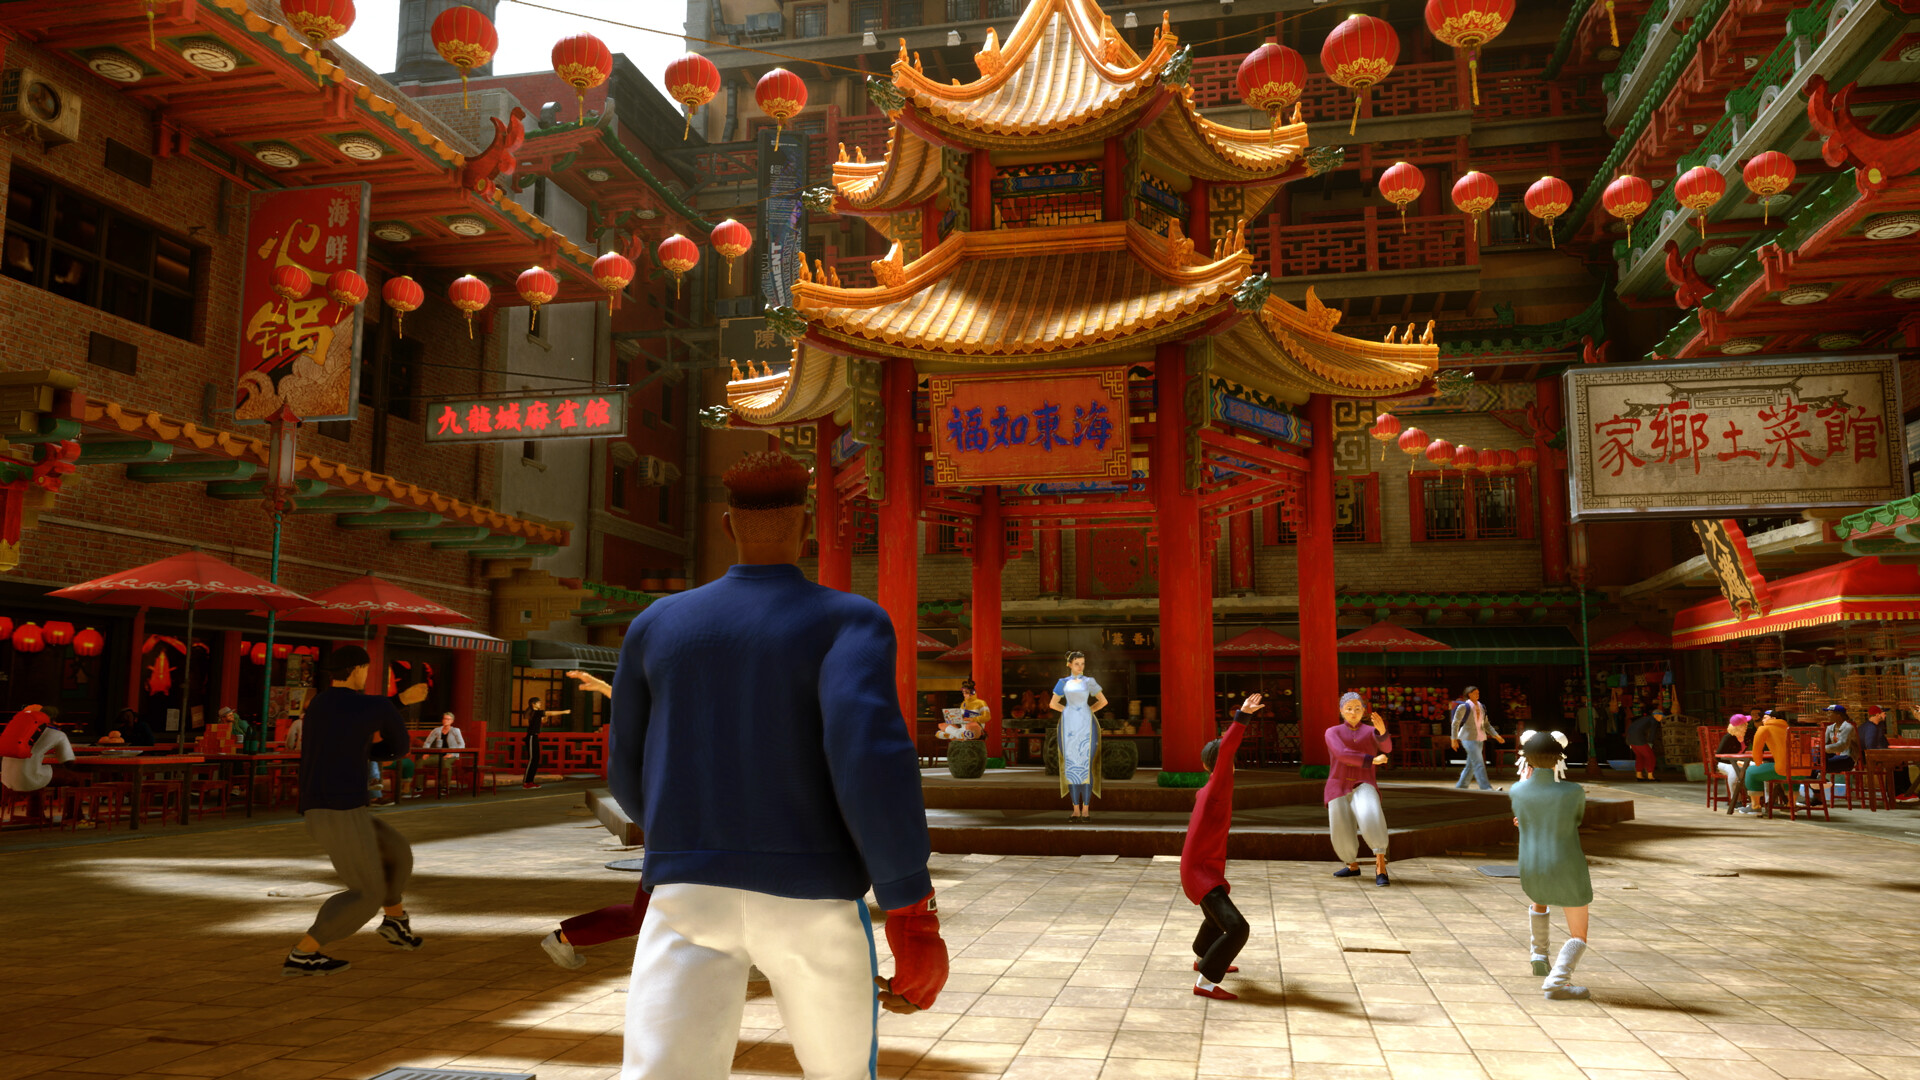 Street Fighter 6 Deluxe Edition Steam Altergift